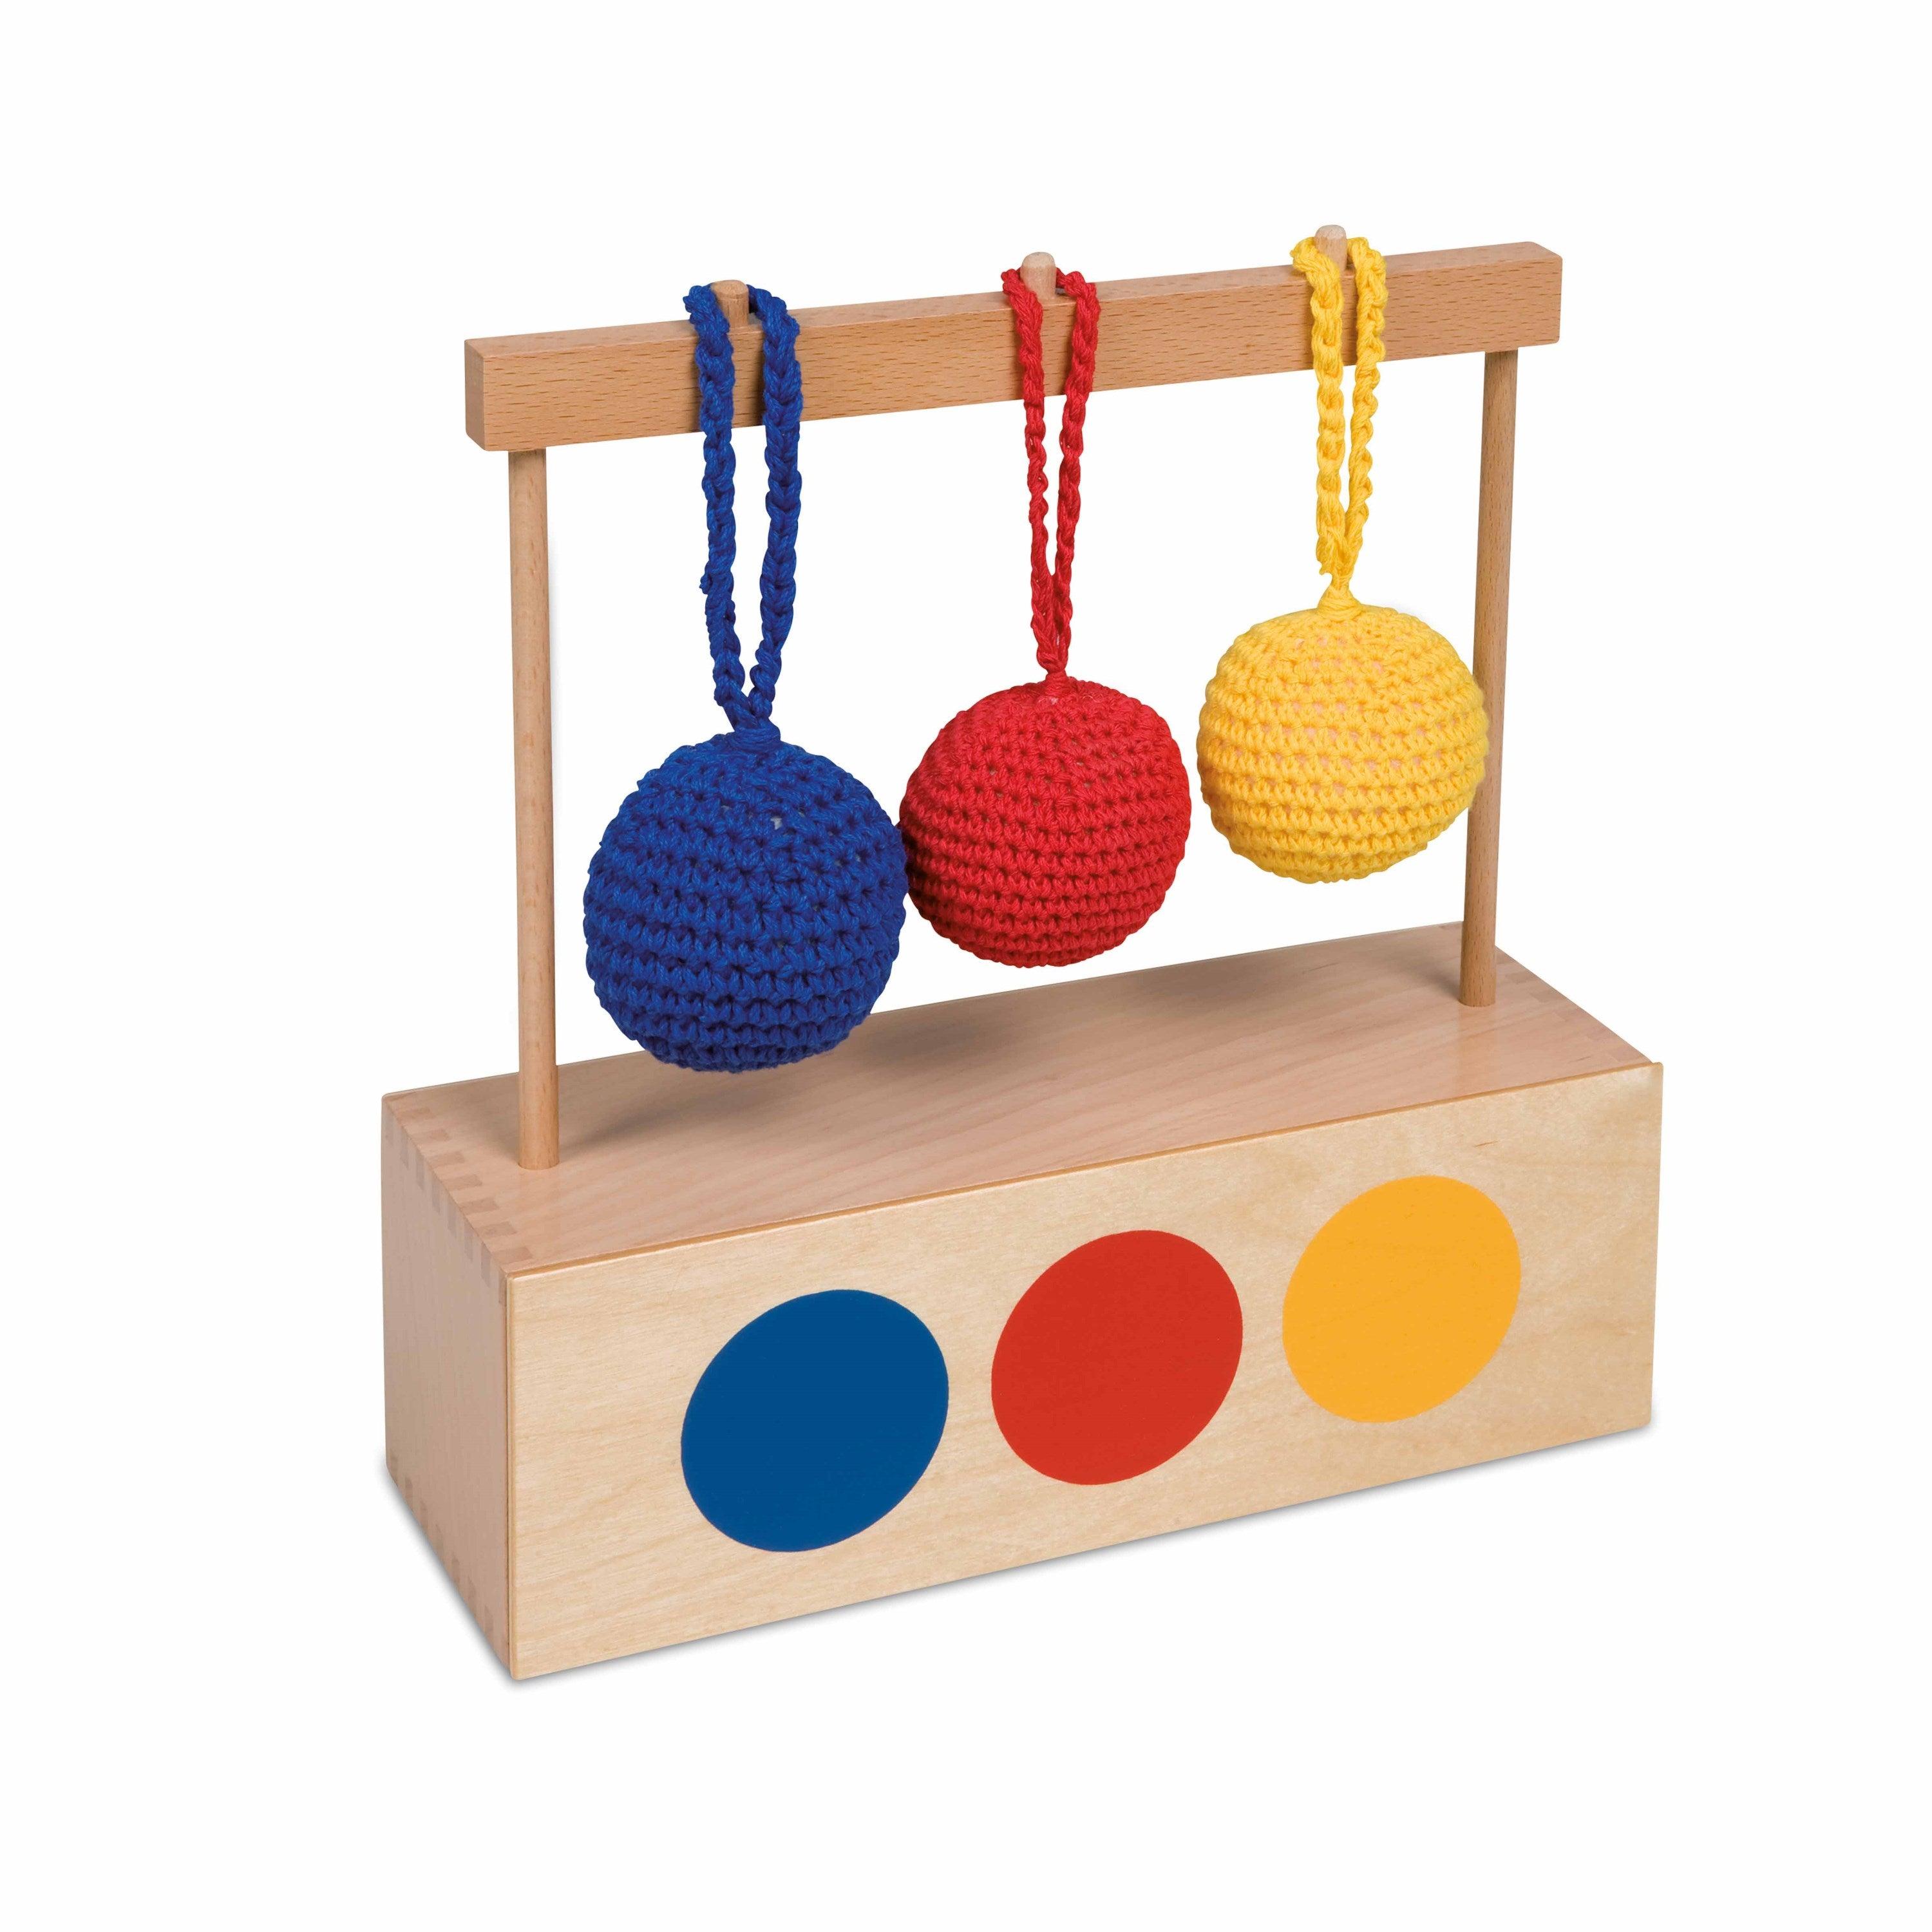 Nienhuis Montessori: Imbucare Box With 3 Colored Knit Balls